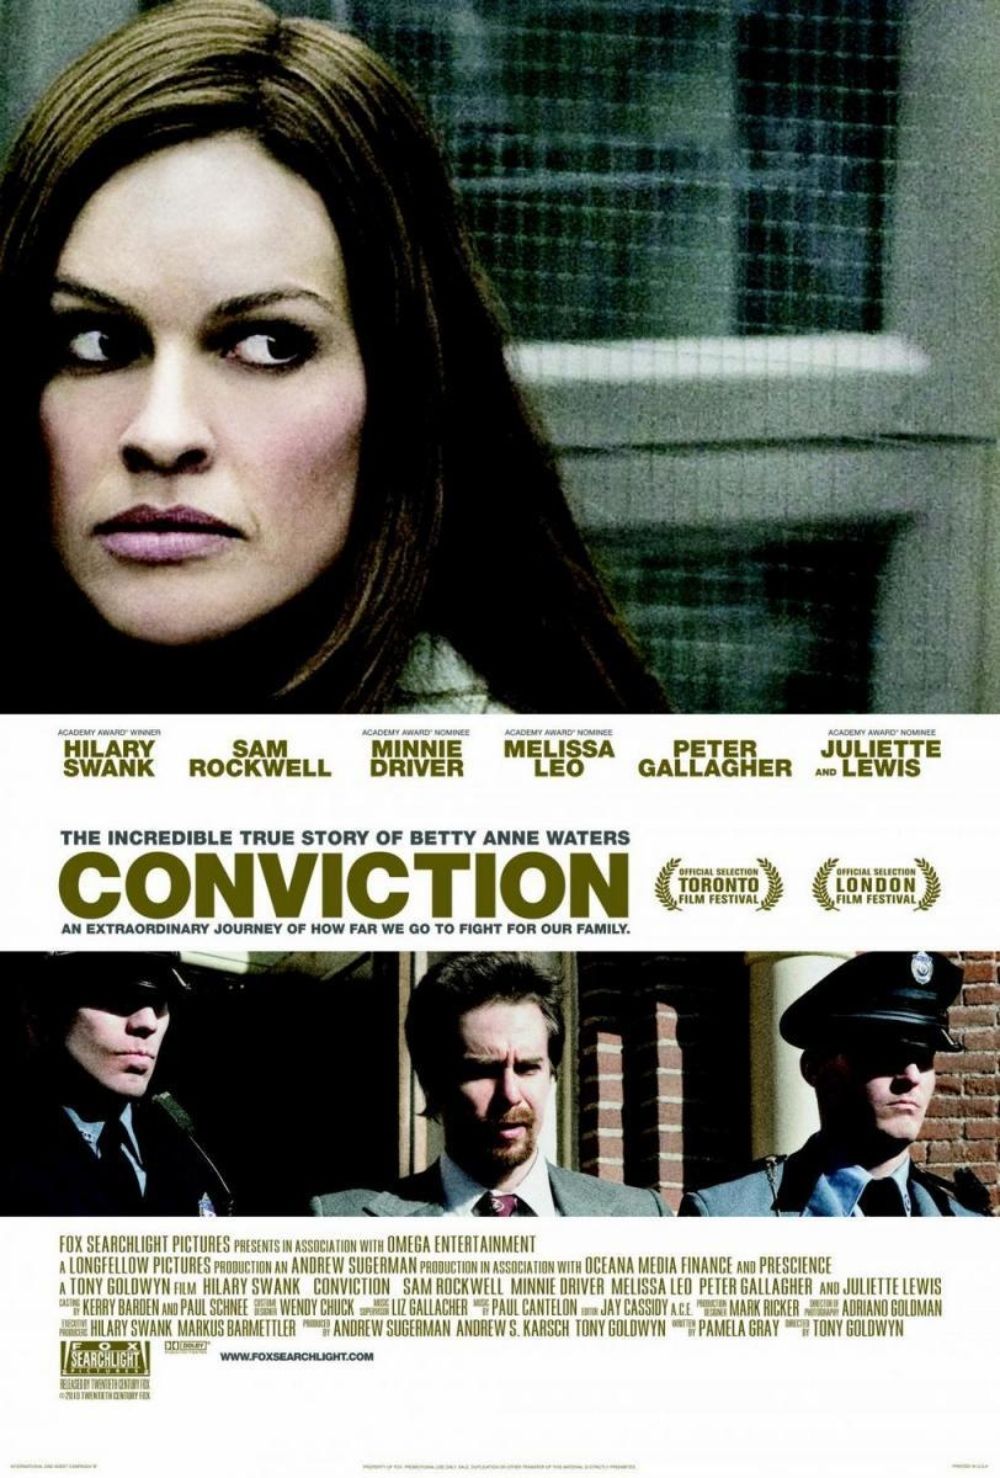 Conviction poster